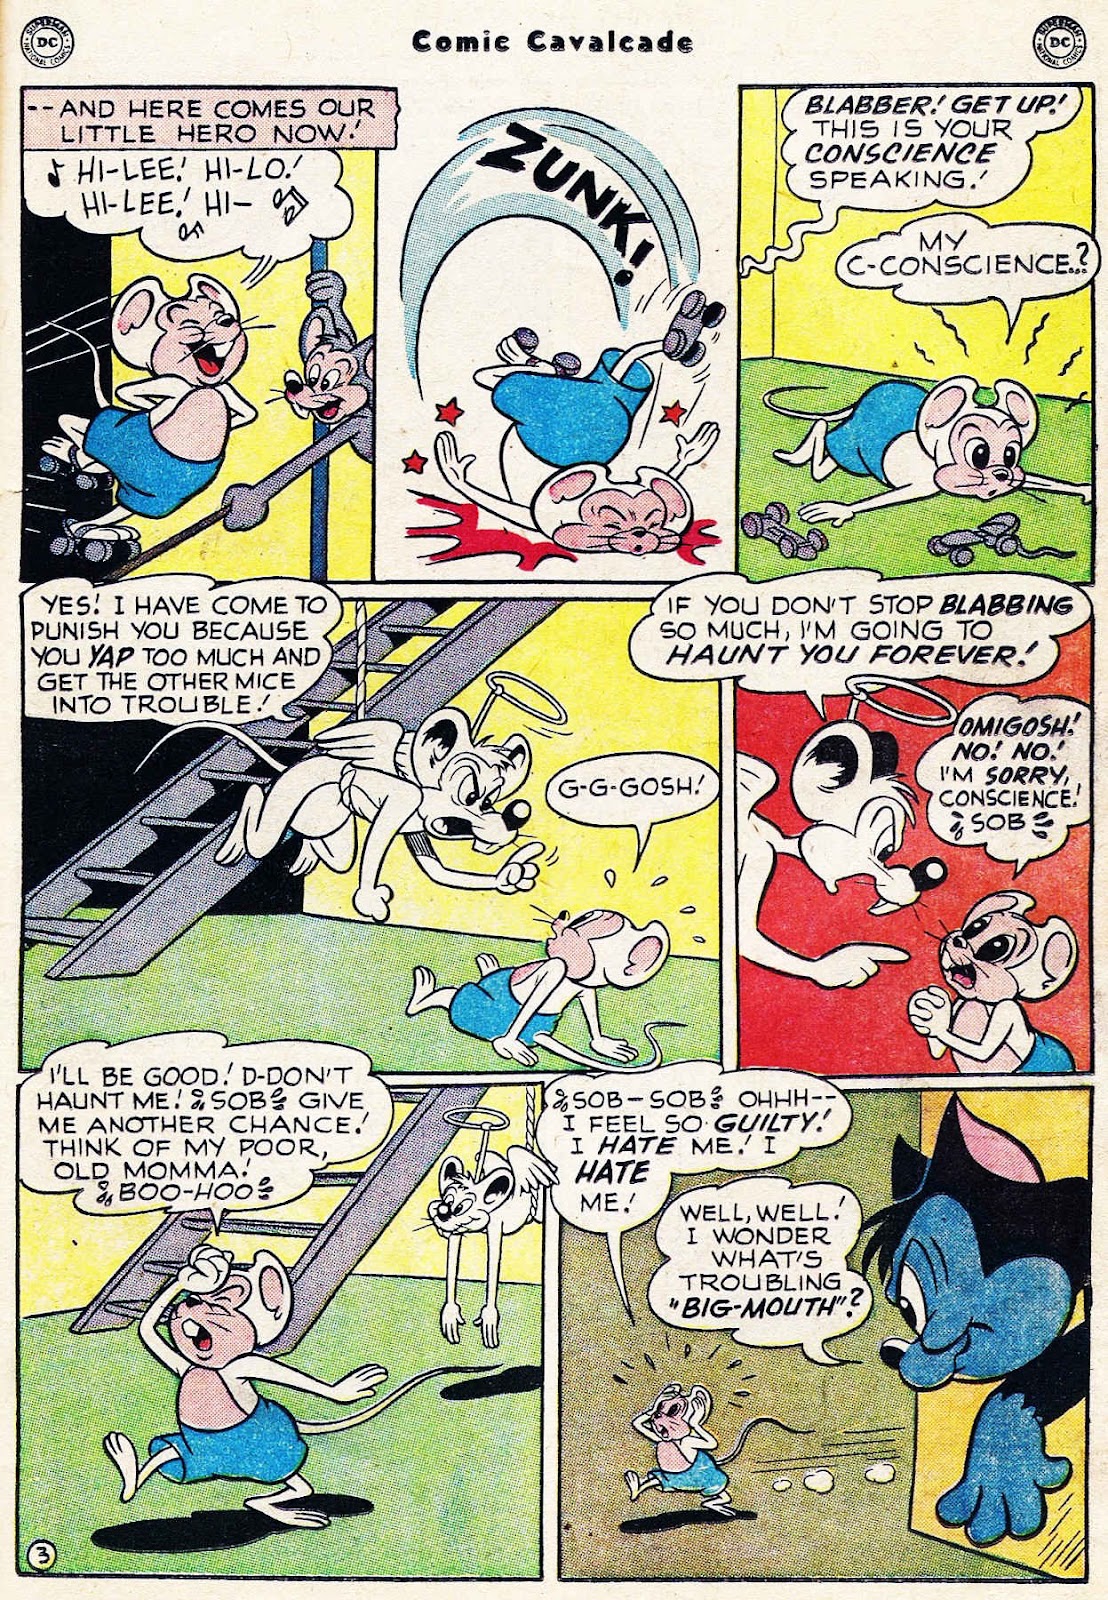 Comic Cavalcade issue 37 - Page 15